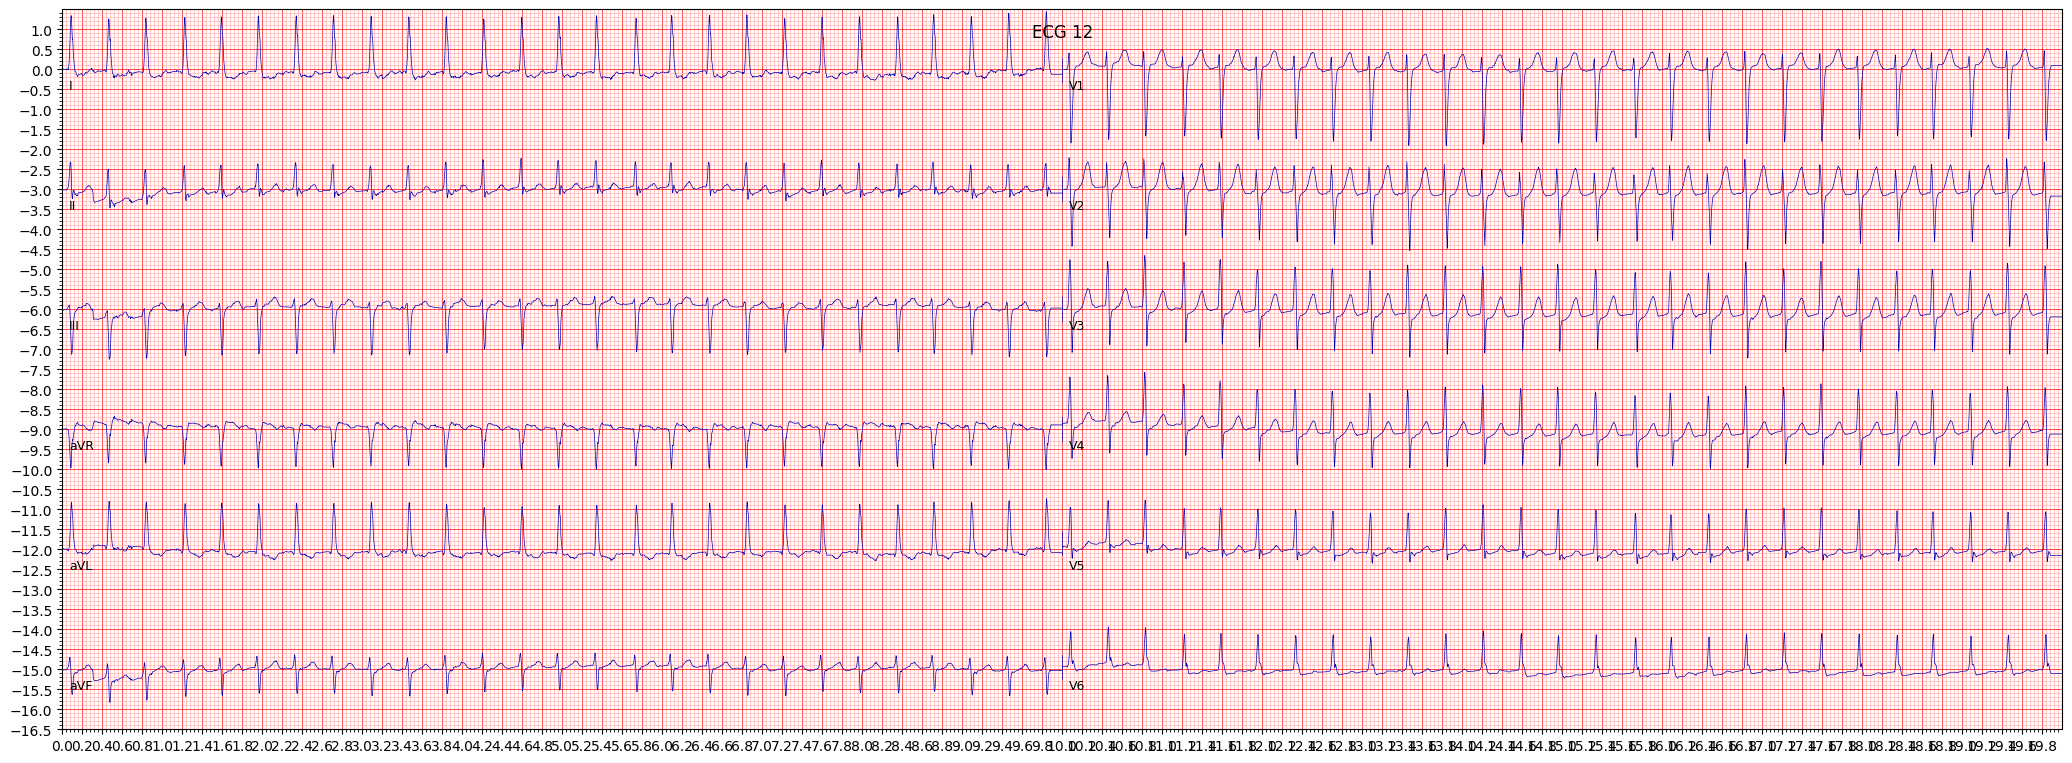 paroxysmal supraventricular tachycardia (PSVT) example 7889